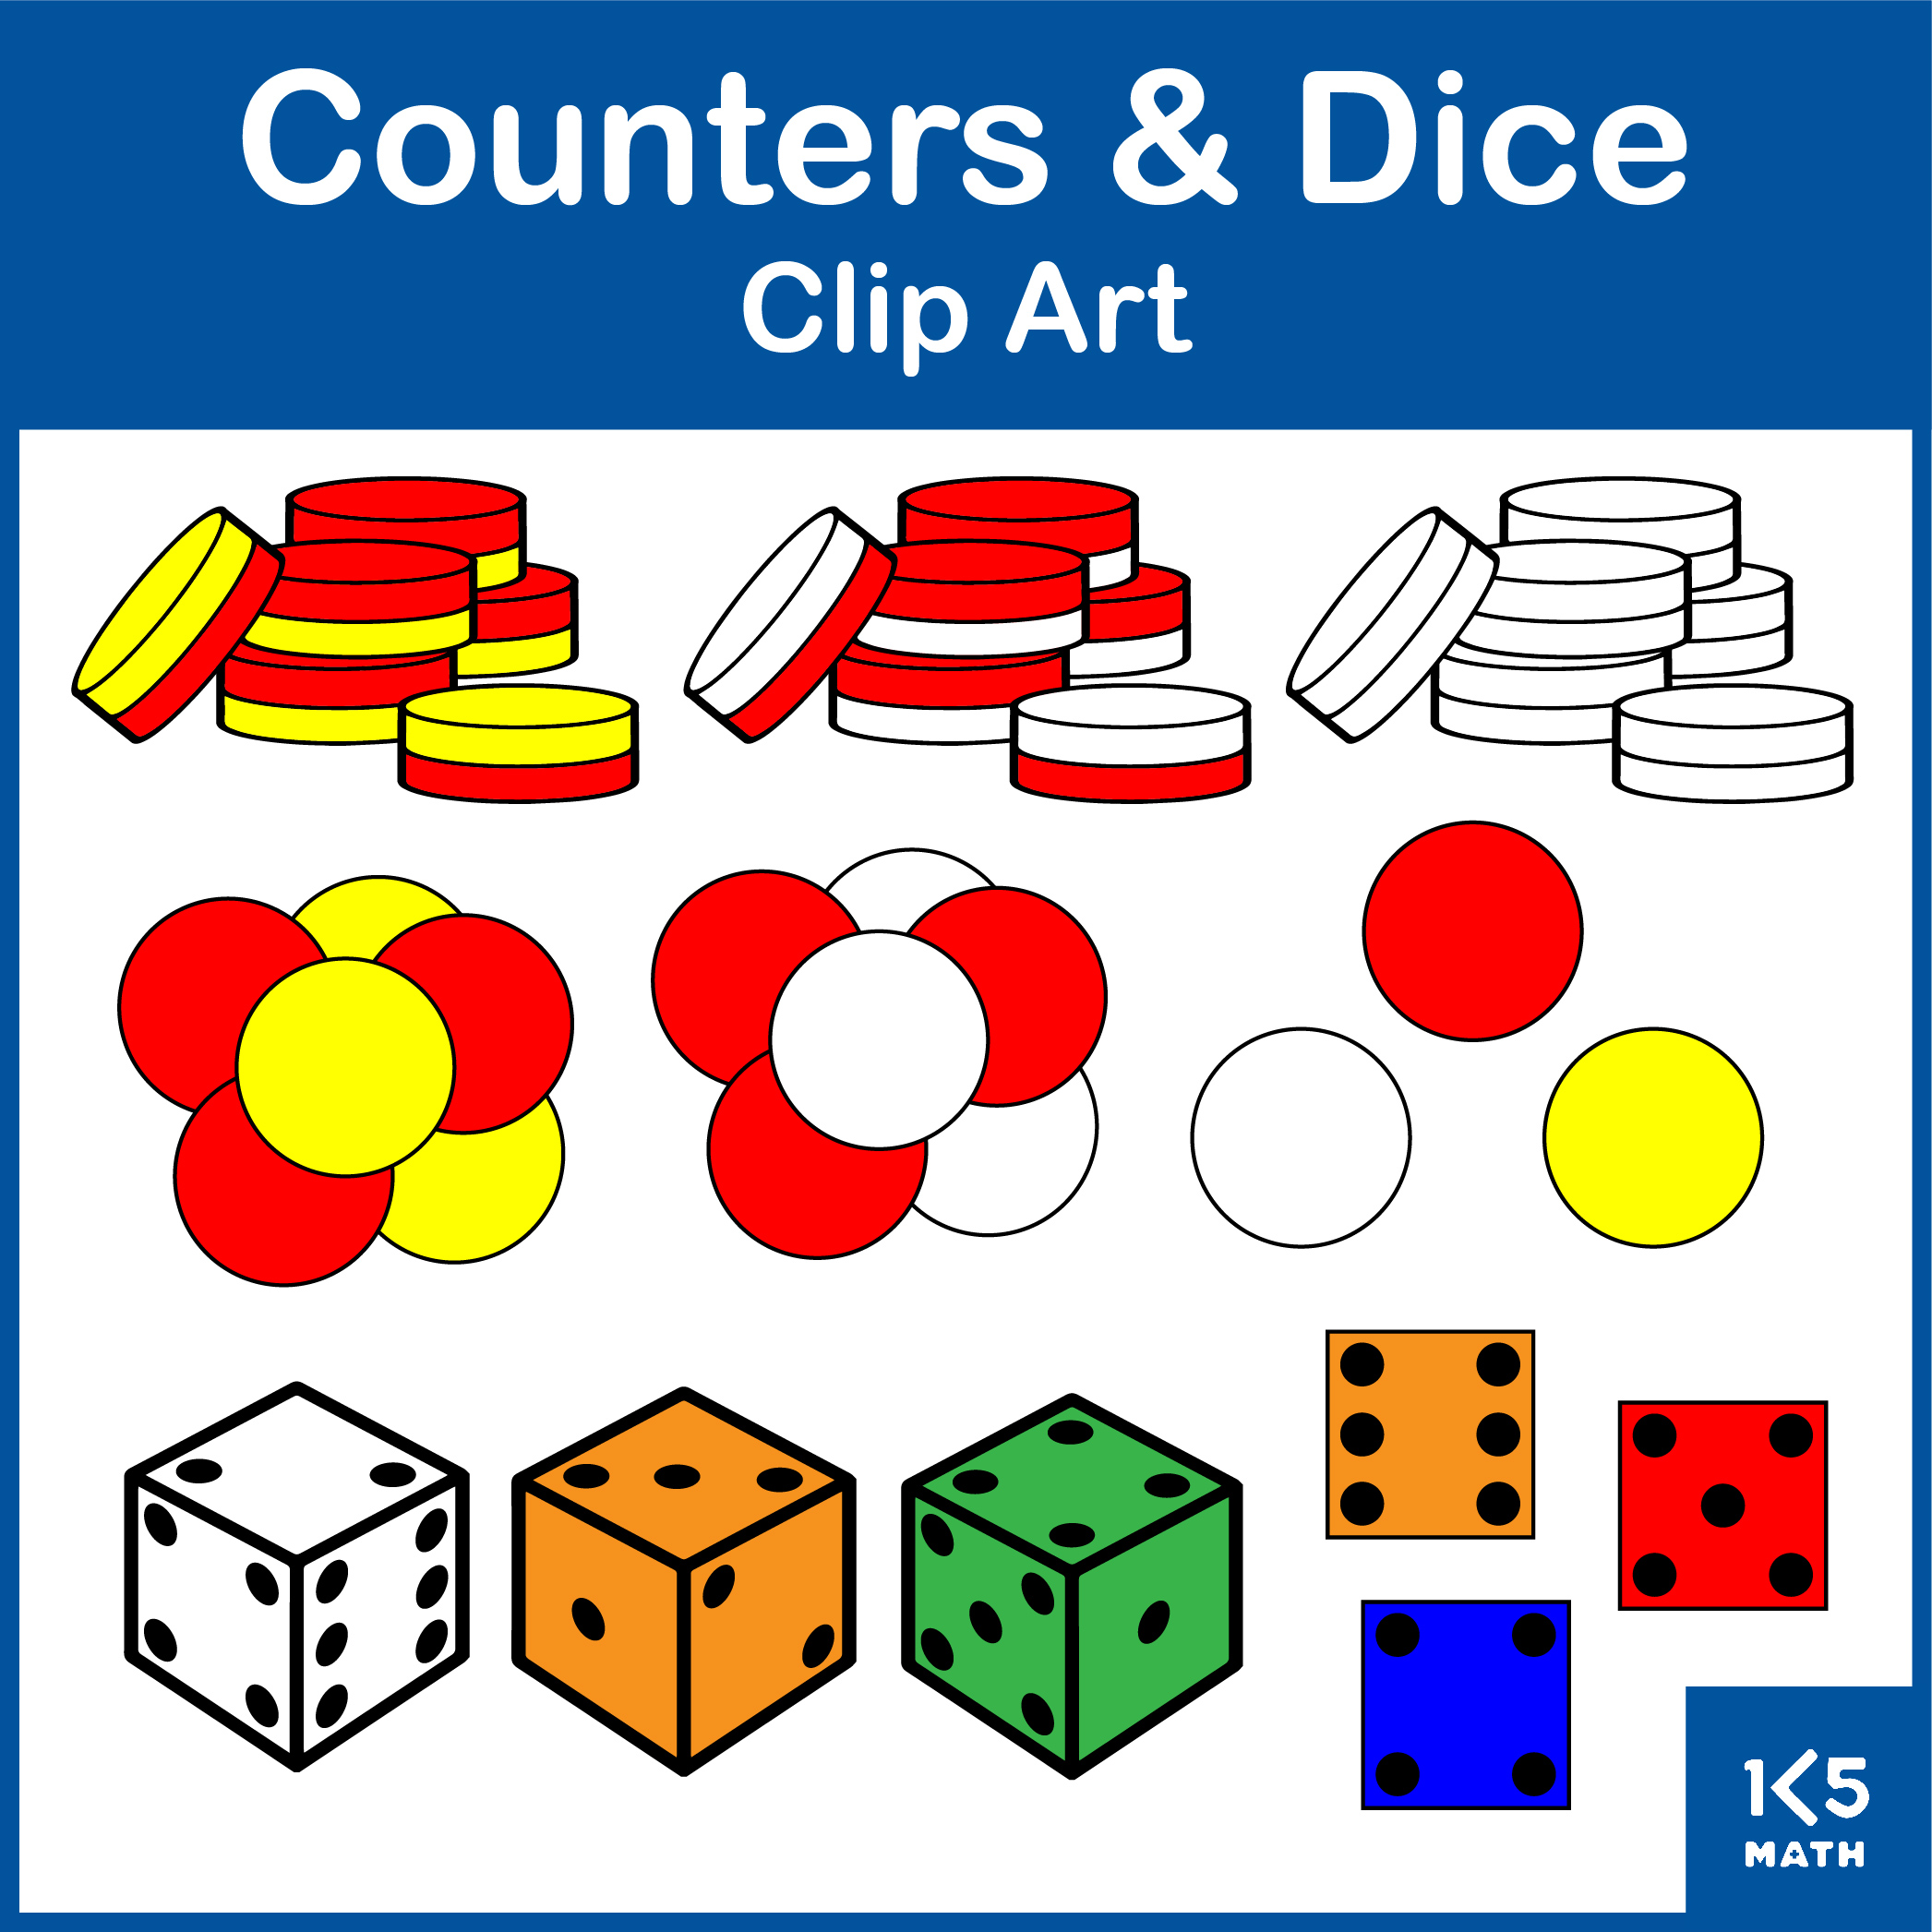 math counters clip art